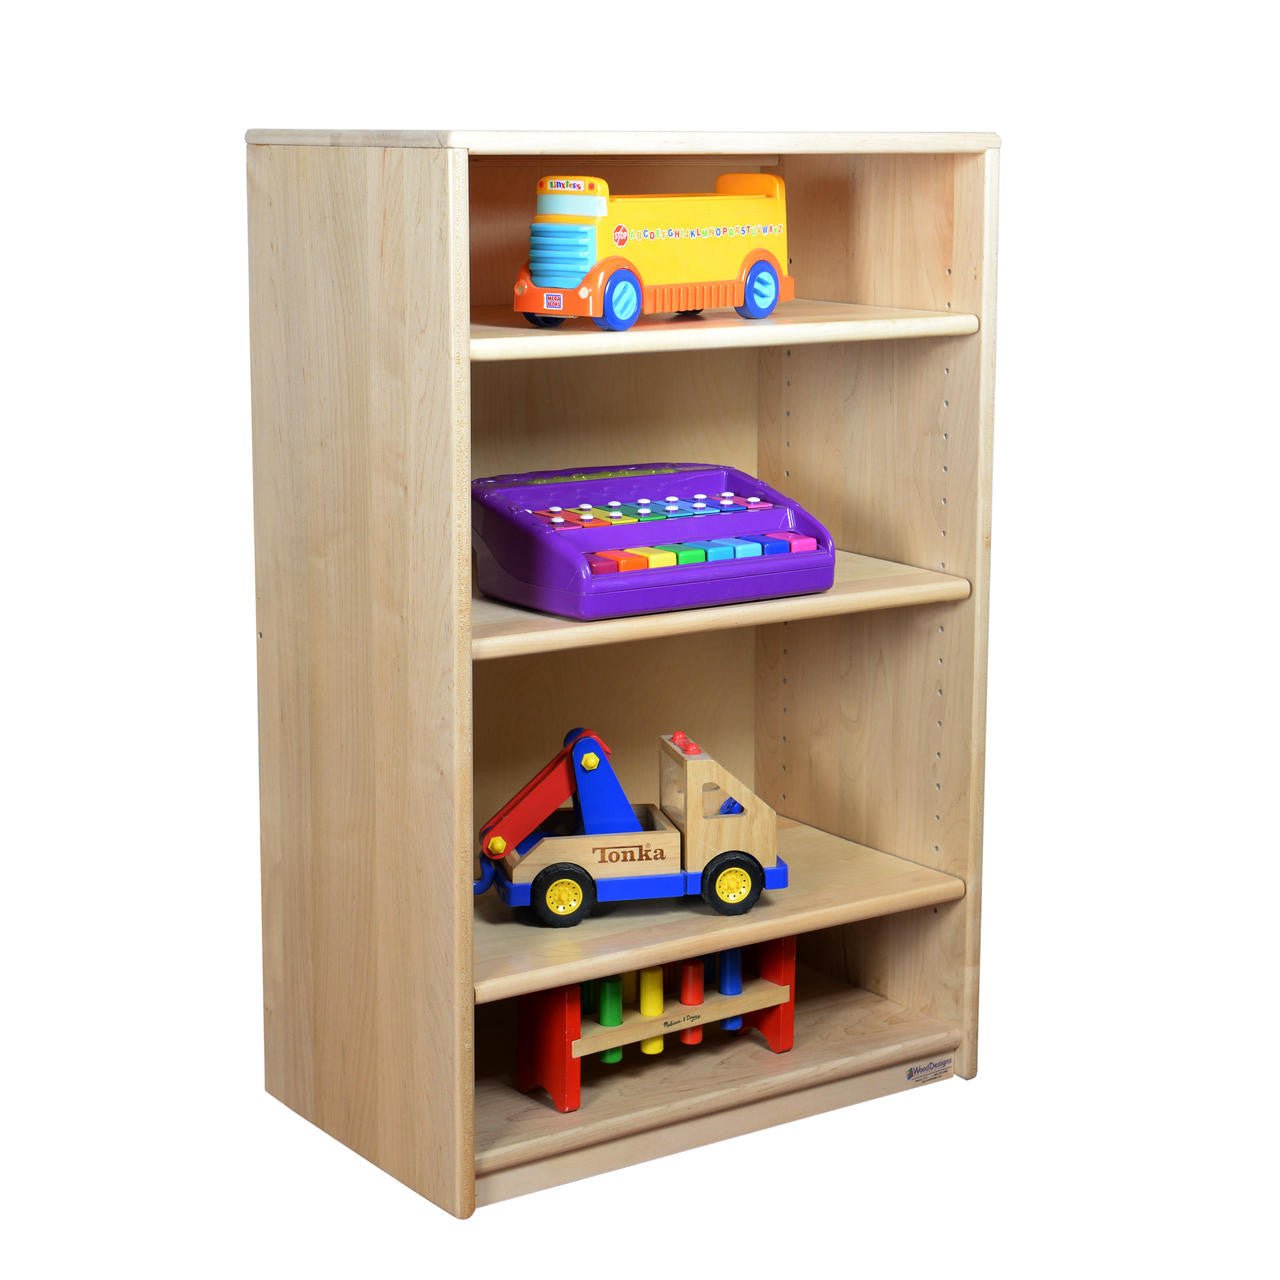 Maple Heritage Storage with Adjustable Shelves